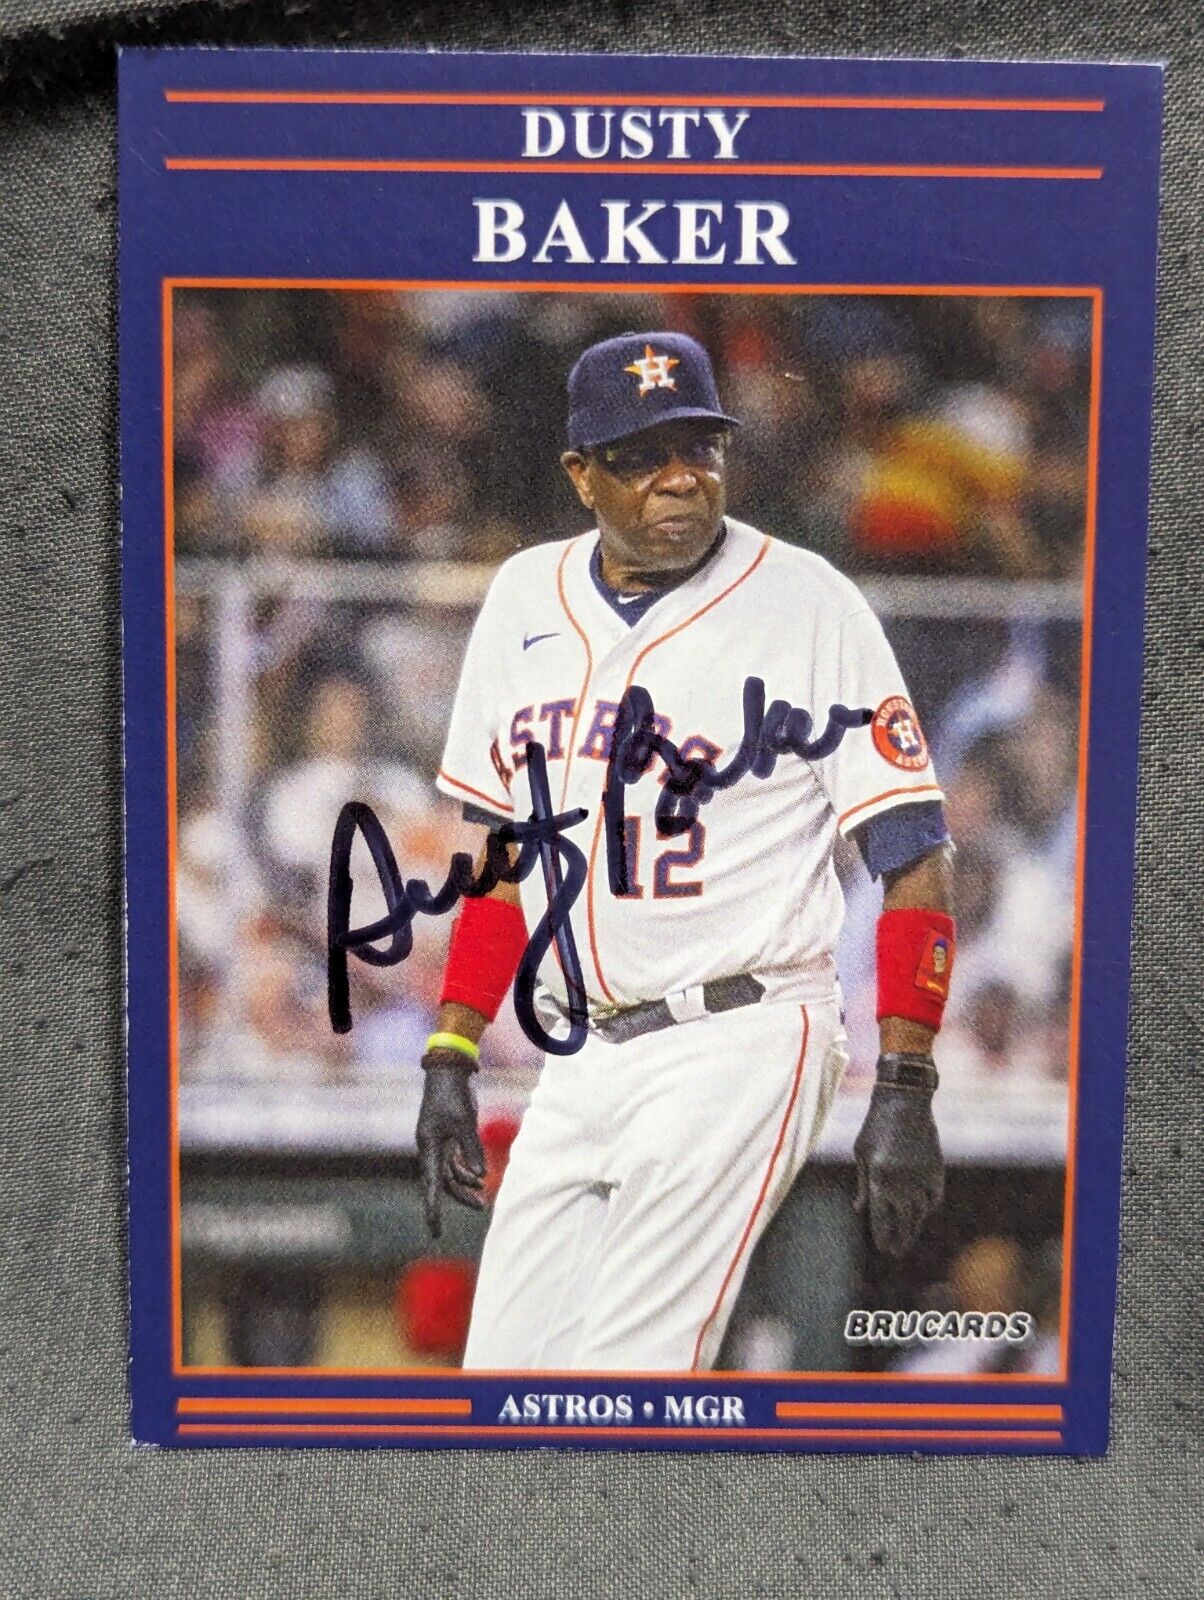 Dusty Baker Autograph Signed Card Houston Astros 